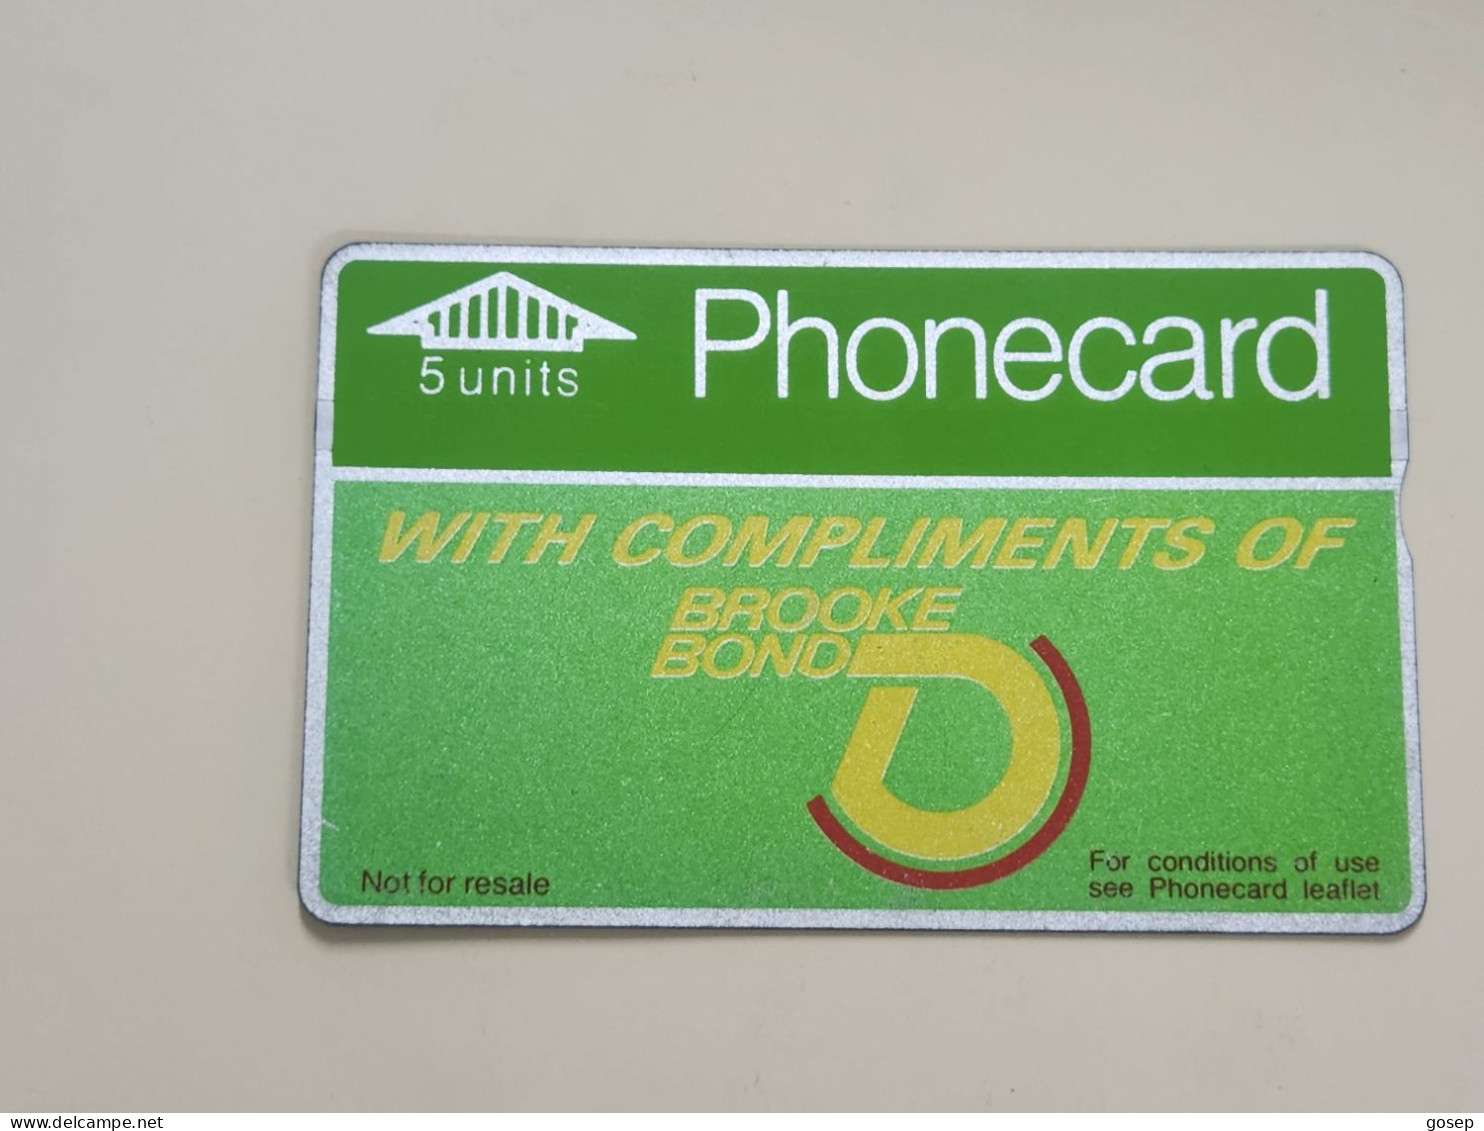 United Kingdom-(BTA009)-BROOKE BOND A-(5units)-(19)-(801A93201)-price Cataloge10.00£-used Card+1card Prepiad Free - BT Advertising Issues